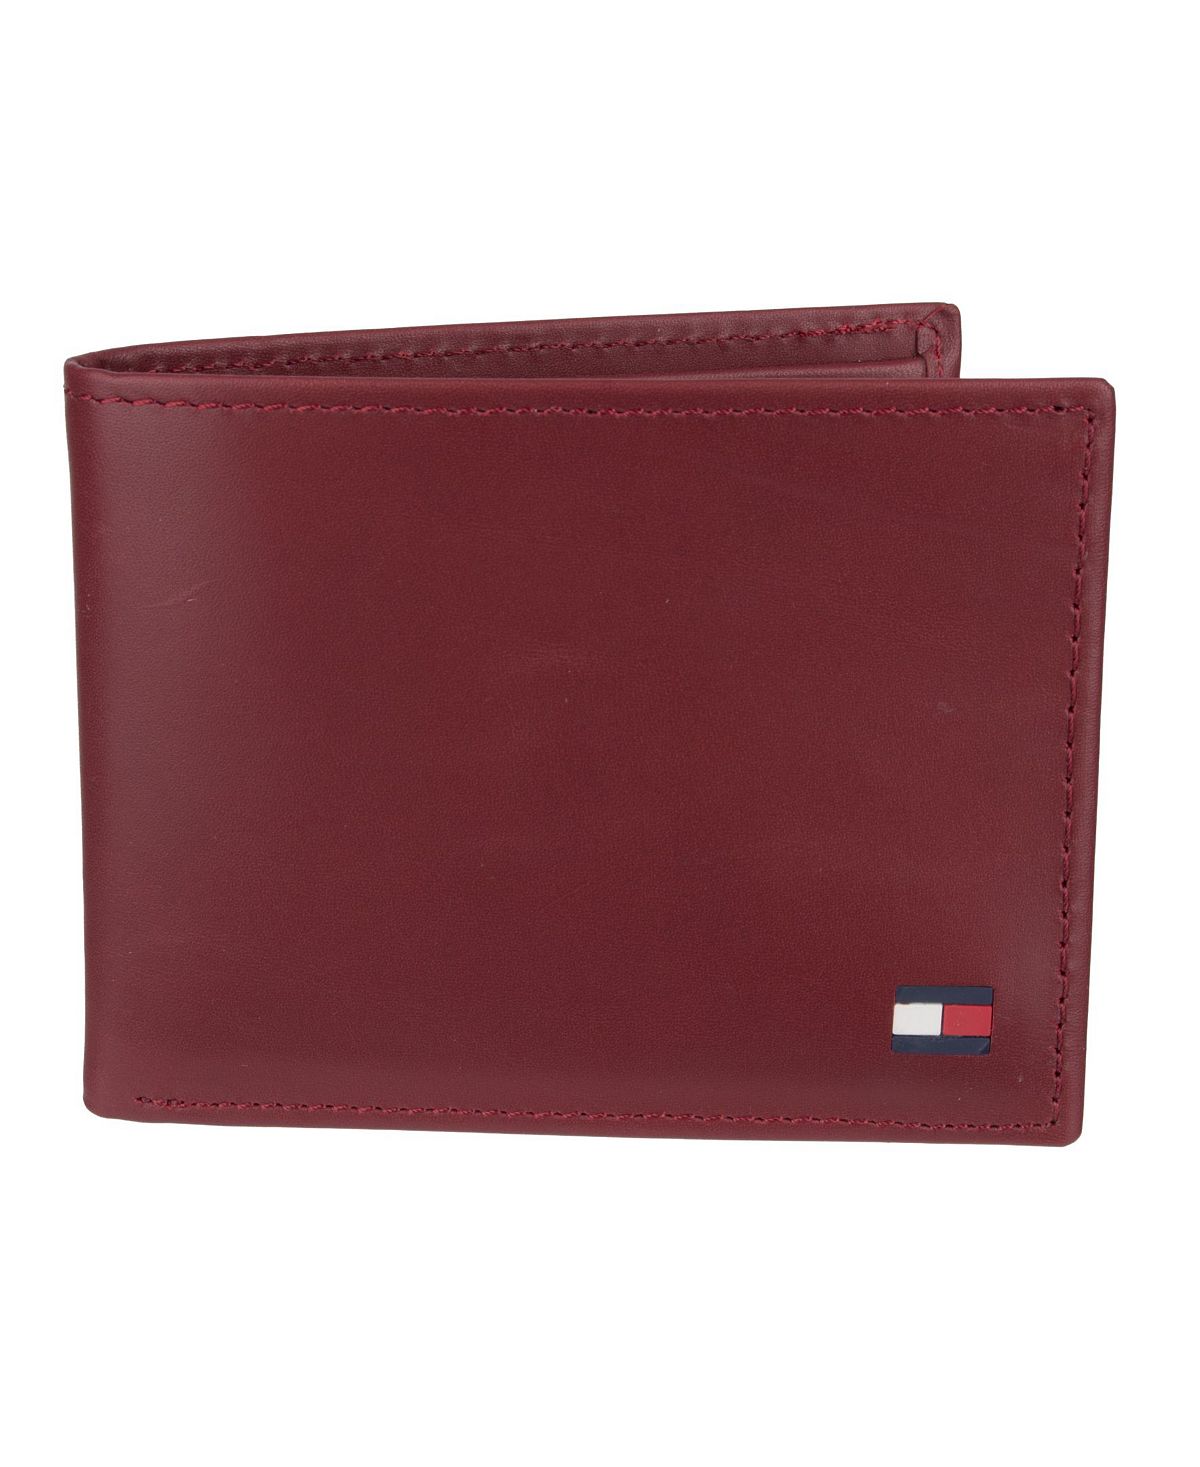 Мужской кожаный кошелек Passcase Tommy Hilfiger columbia кошелек wallace passcase размер без размера